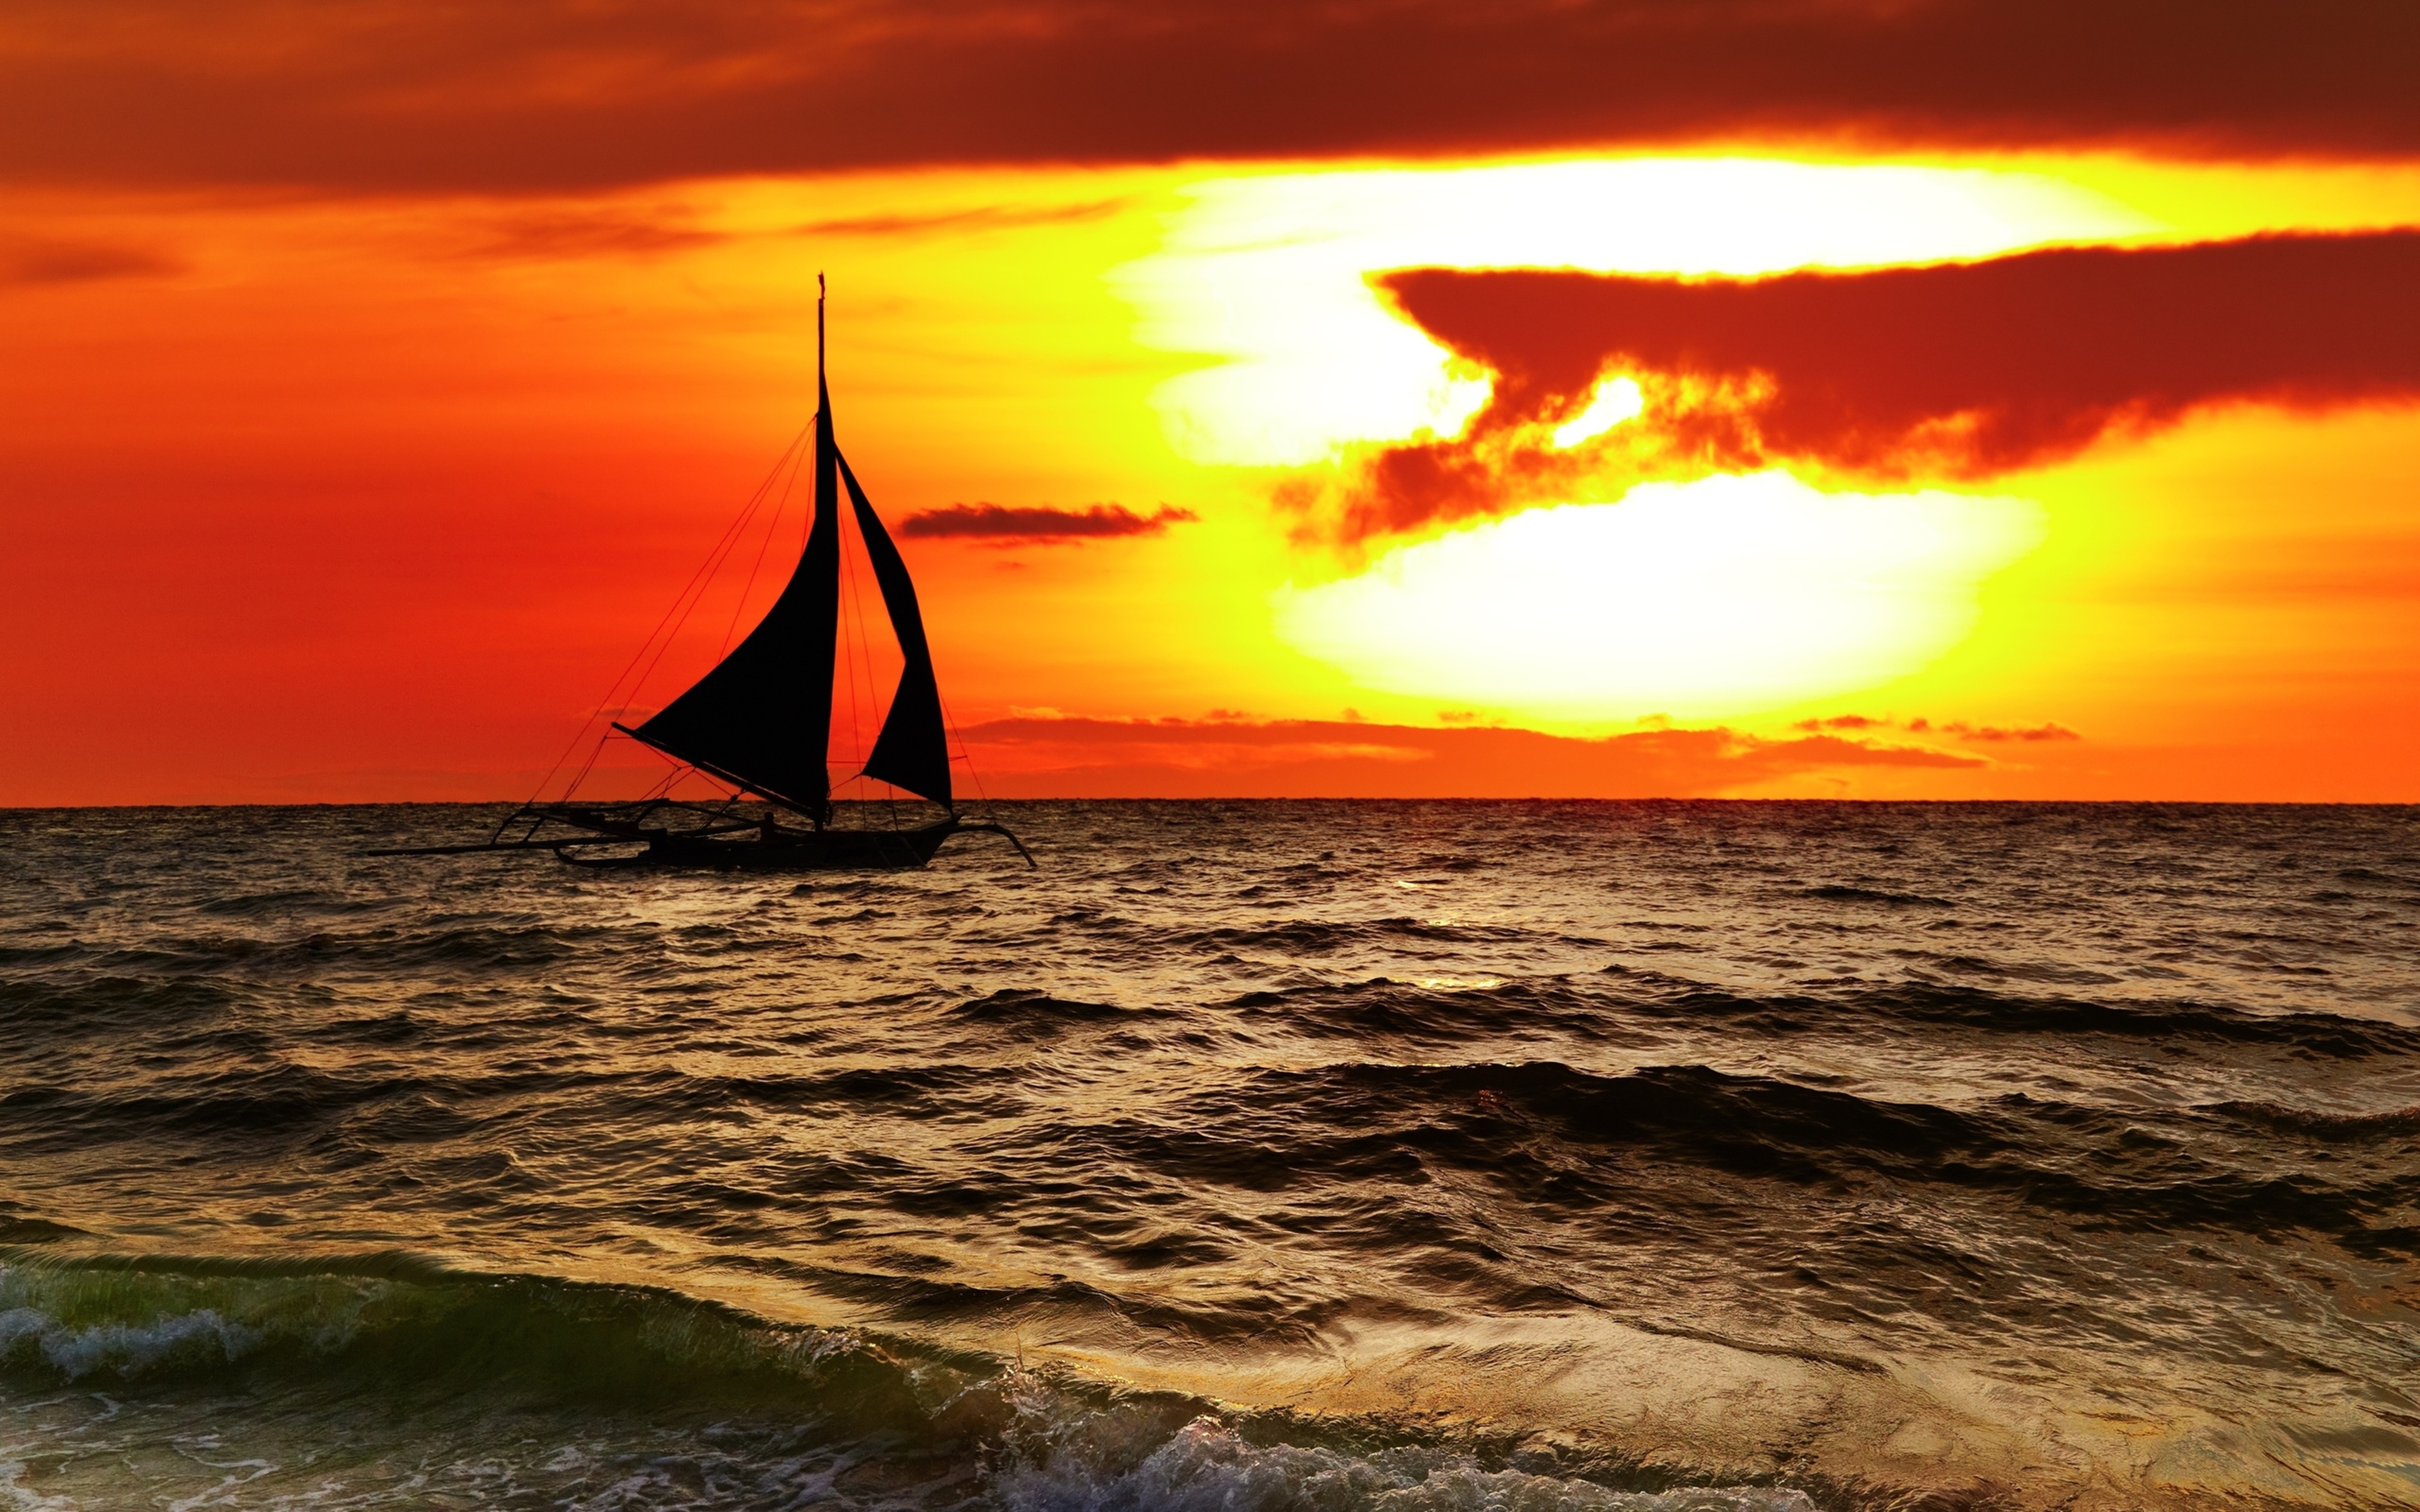 686300 descargar imagen fotografía, atardecer, barco, nube, paisaje, naturaleza, océano, color naranja), navegación, mar, sol: fondos de pantalla y protectores de pantalla gratis